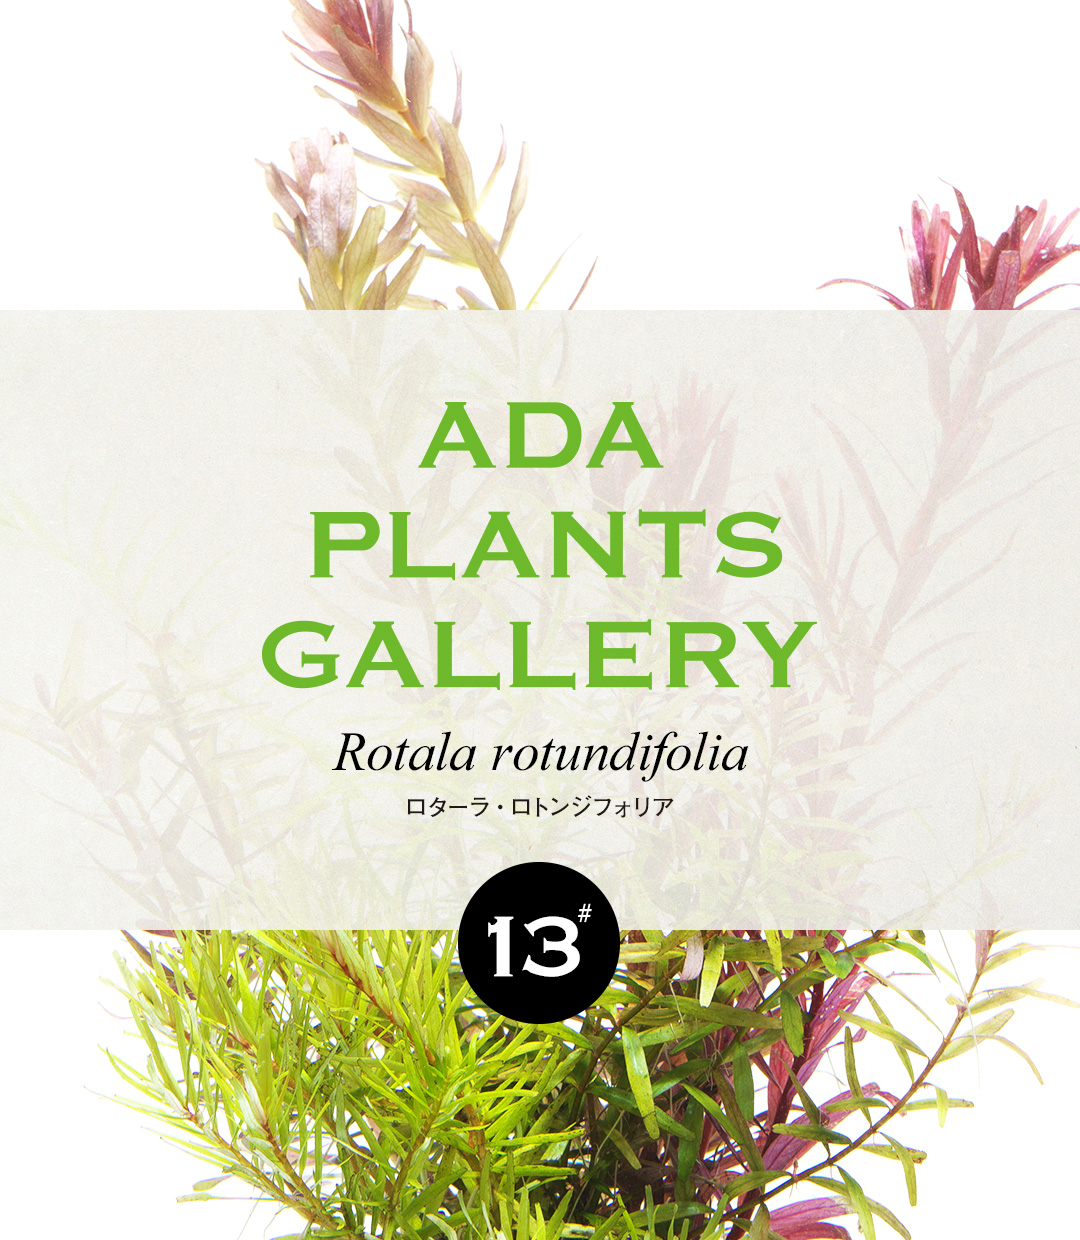 ADA PLANTS GALLERY #13 「ロターラ・ロトンジフォリア」